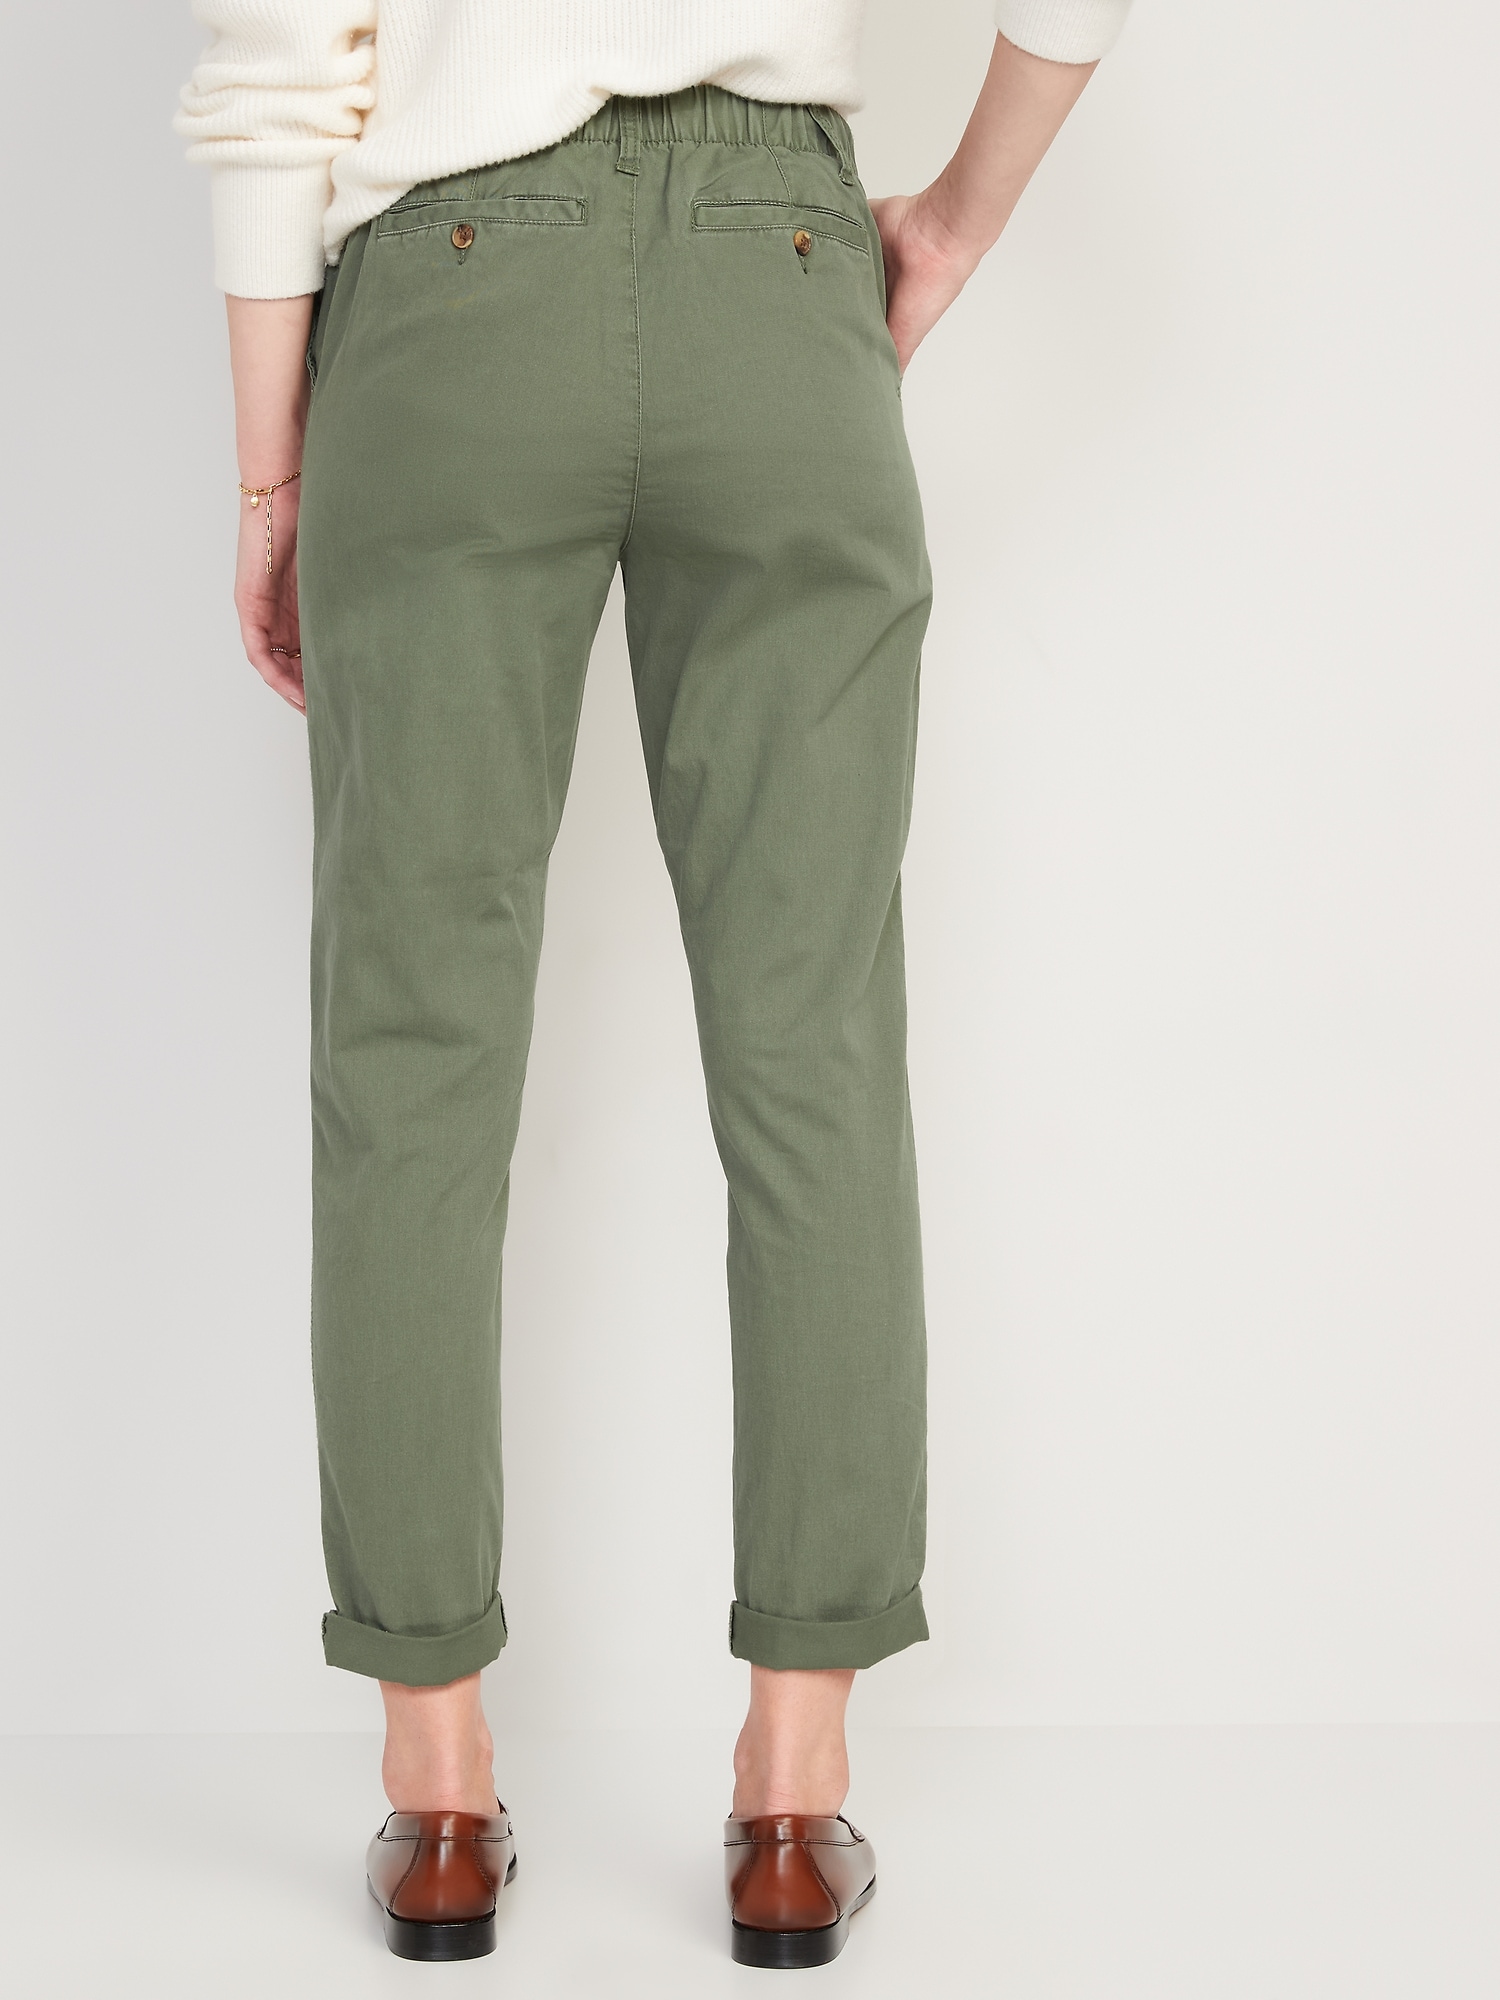 Old Navy Pants Womens 6 Low Rise Crop Zipper Hems Cargo Pockets Casual  Cotton